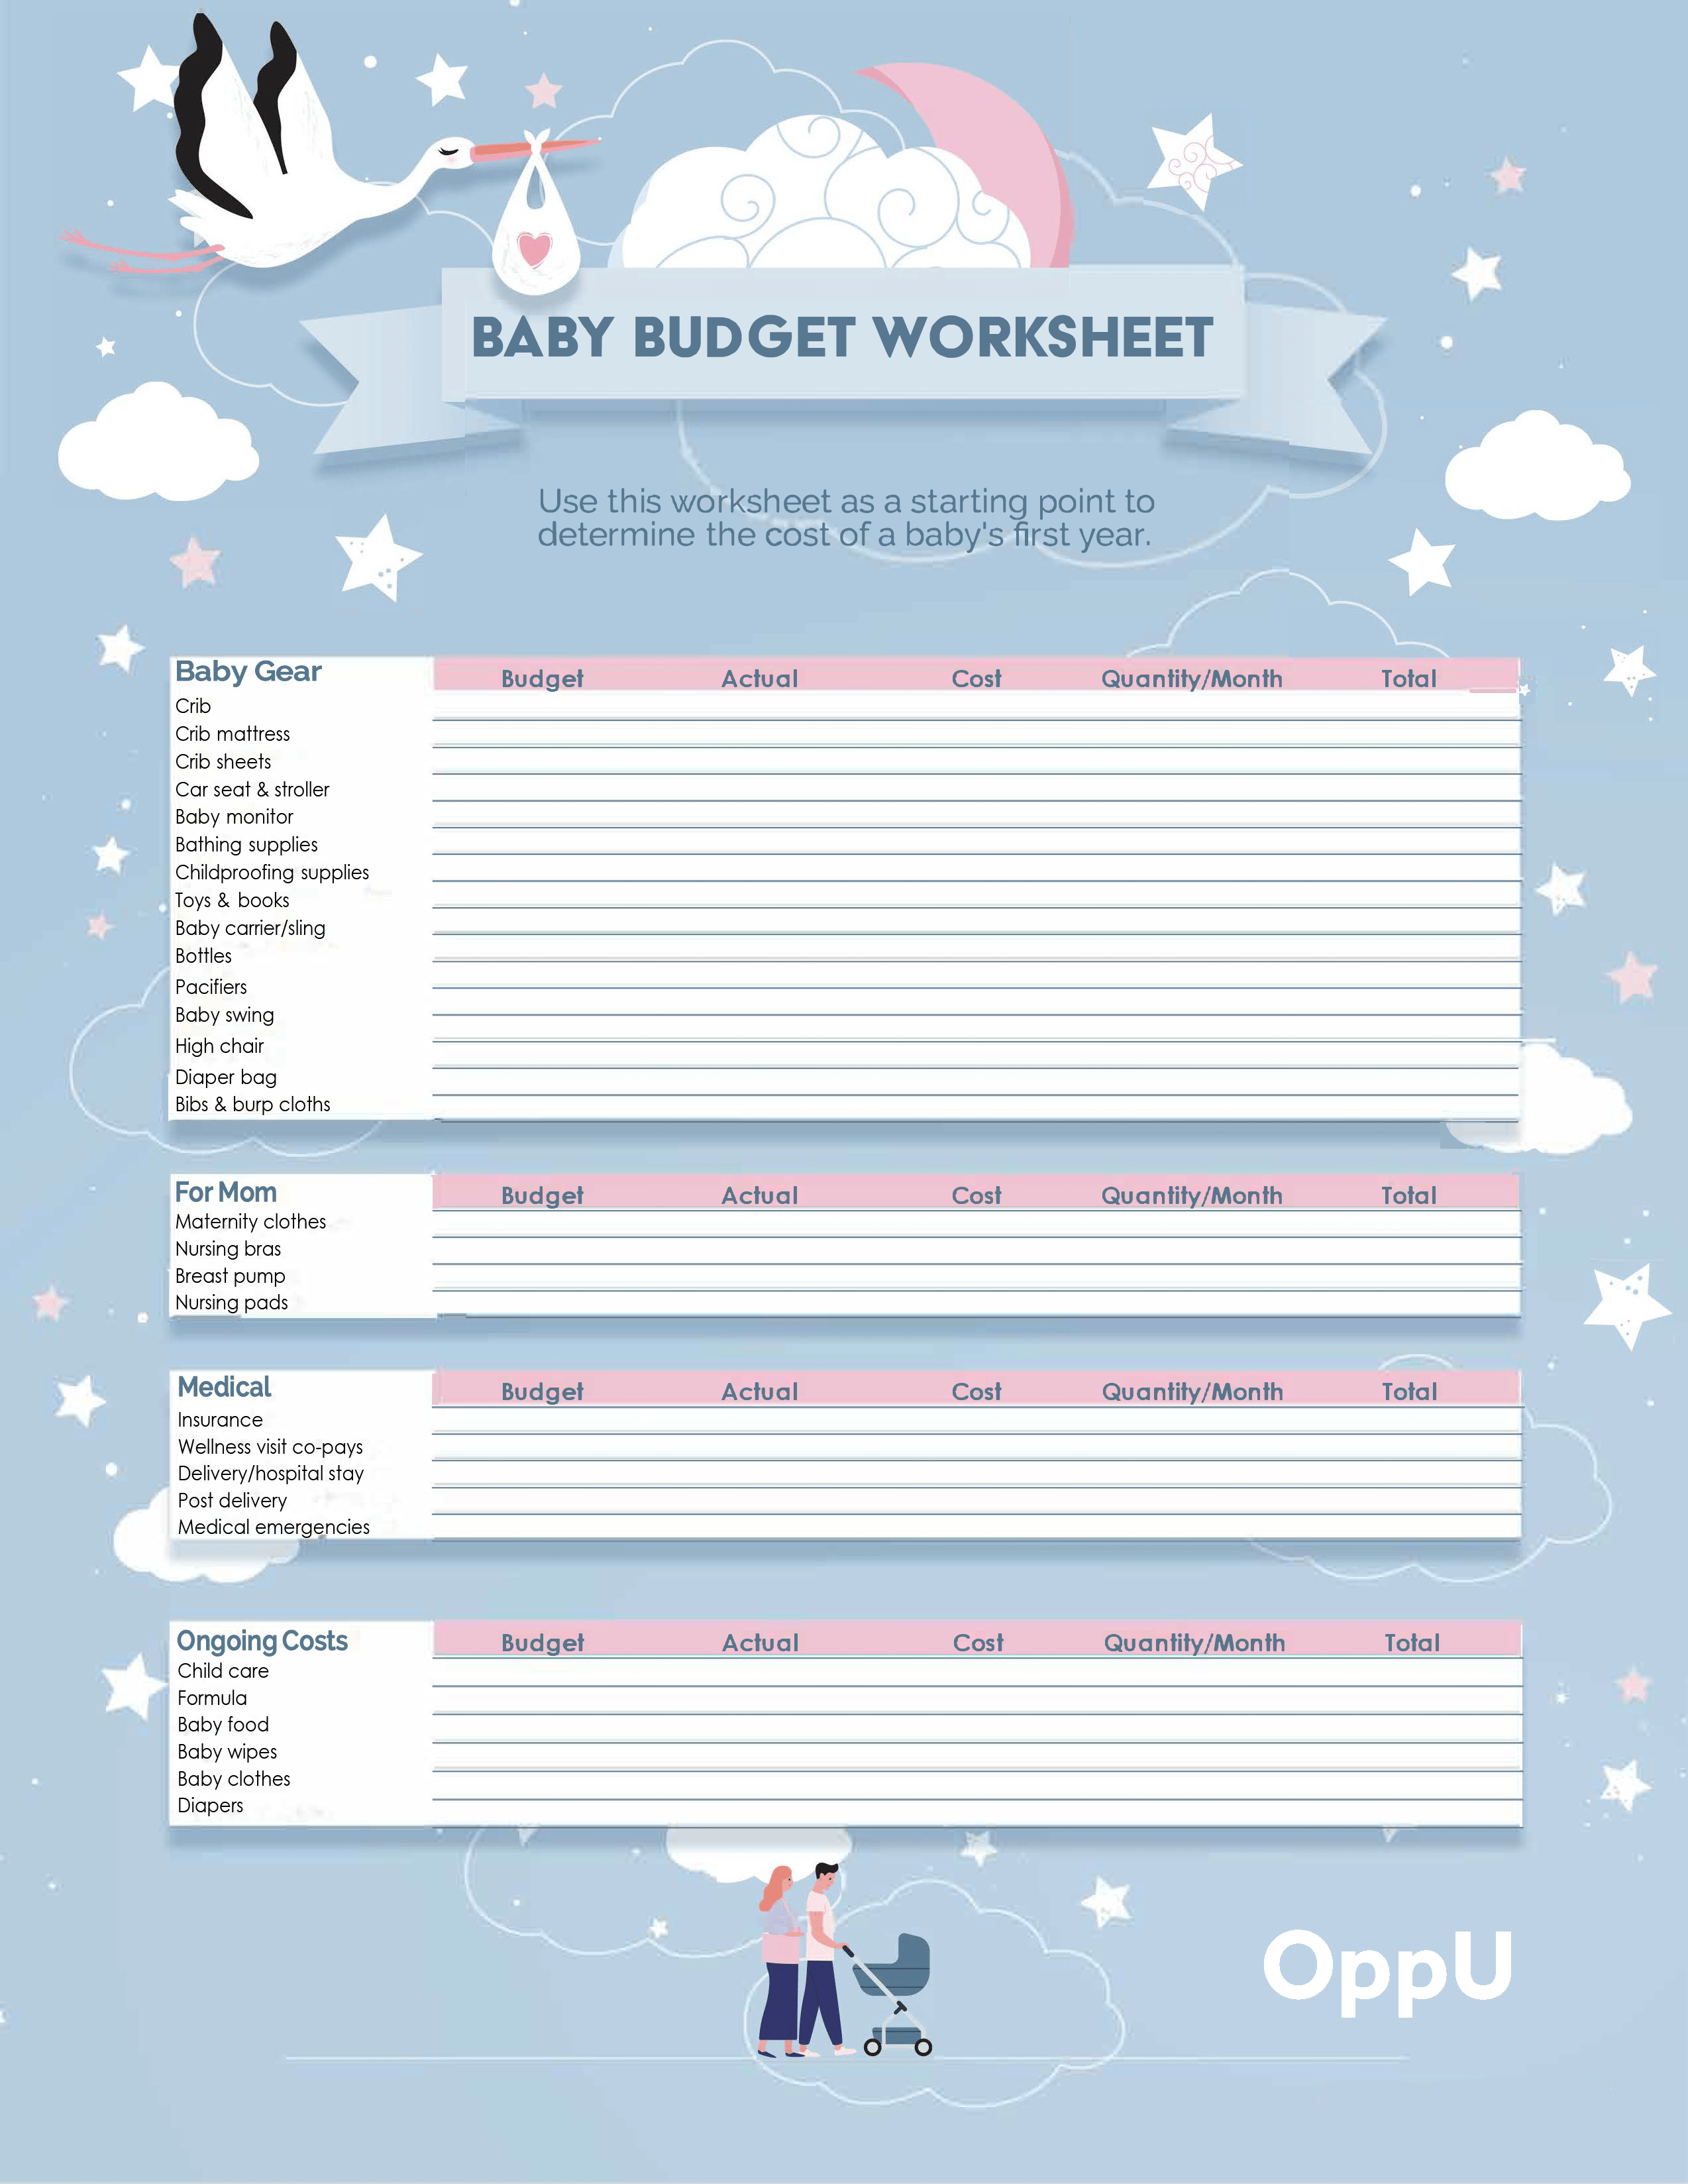 TheLending Baby Budget Worksheet